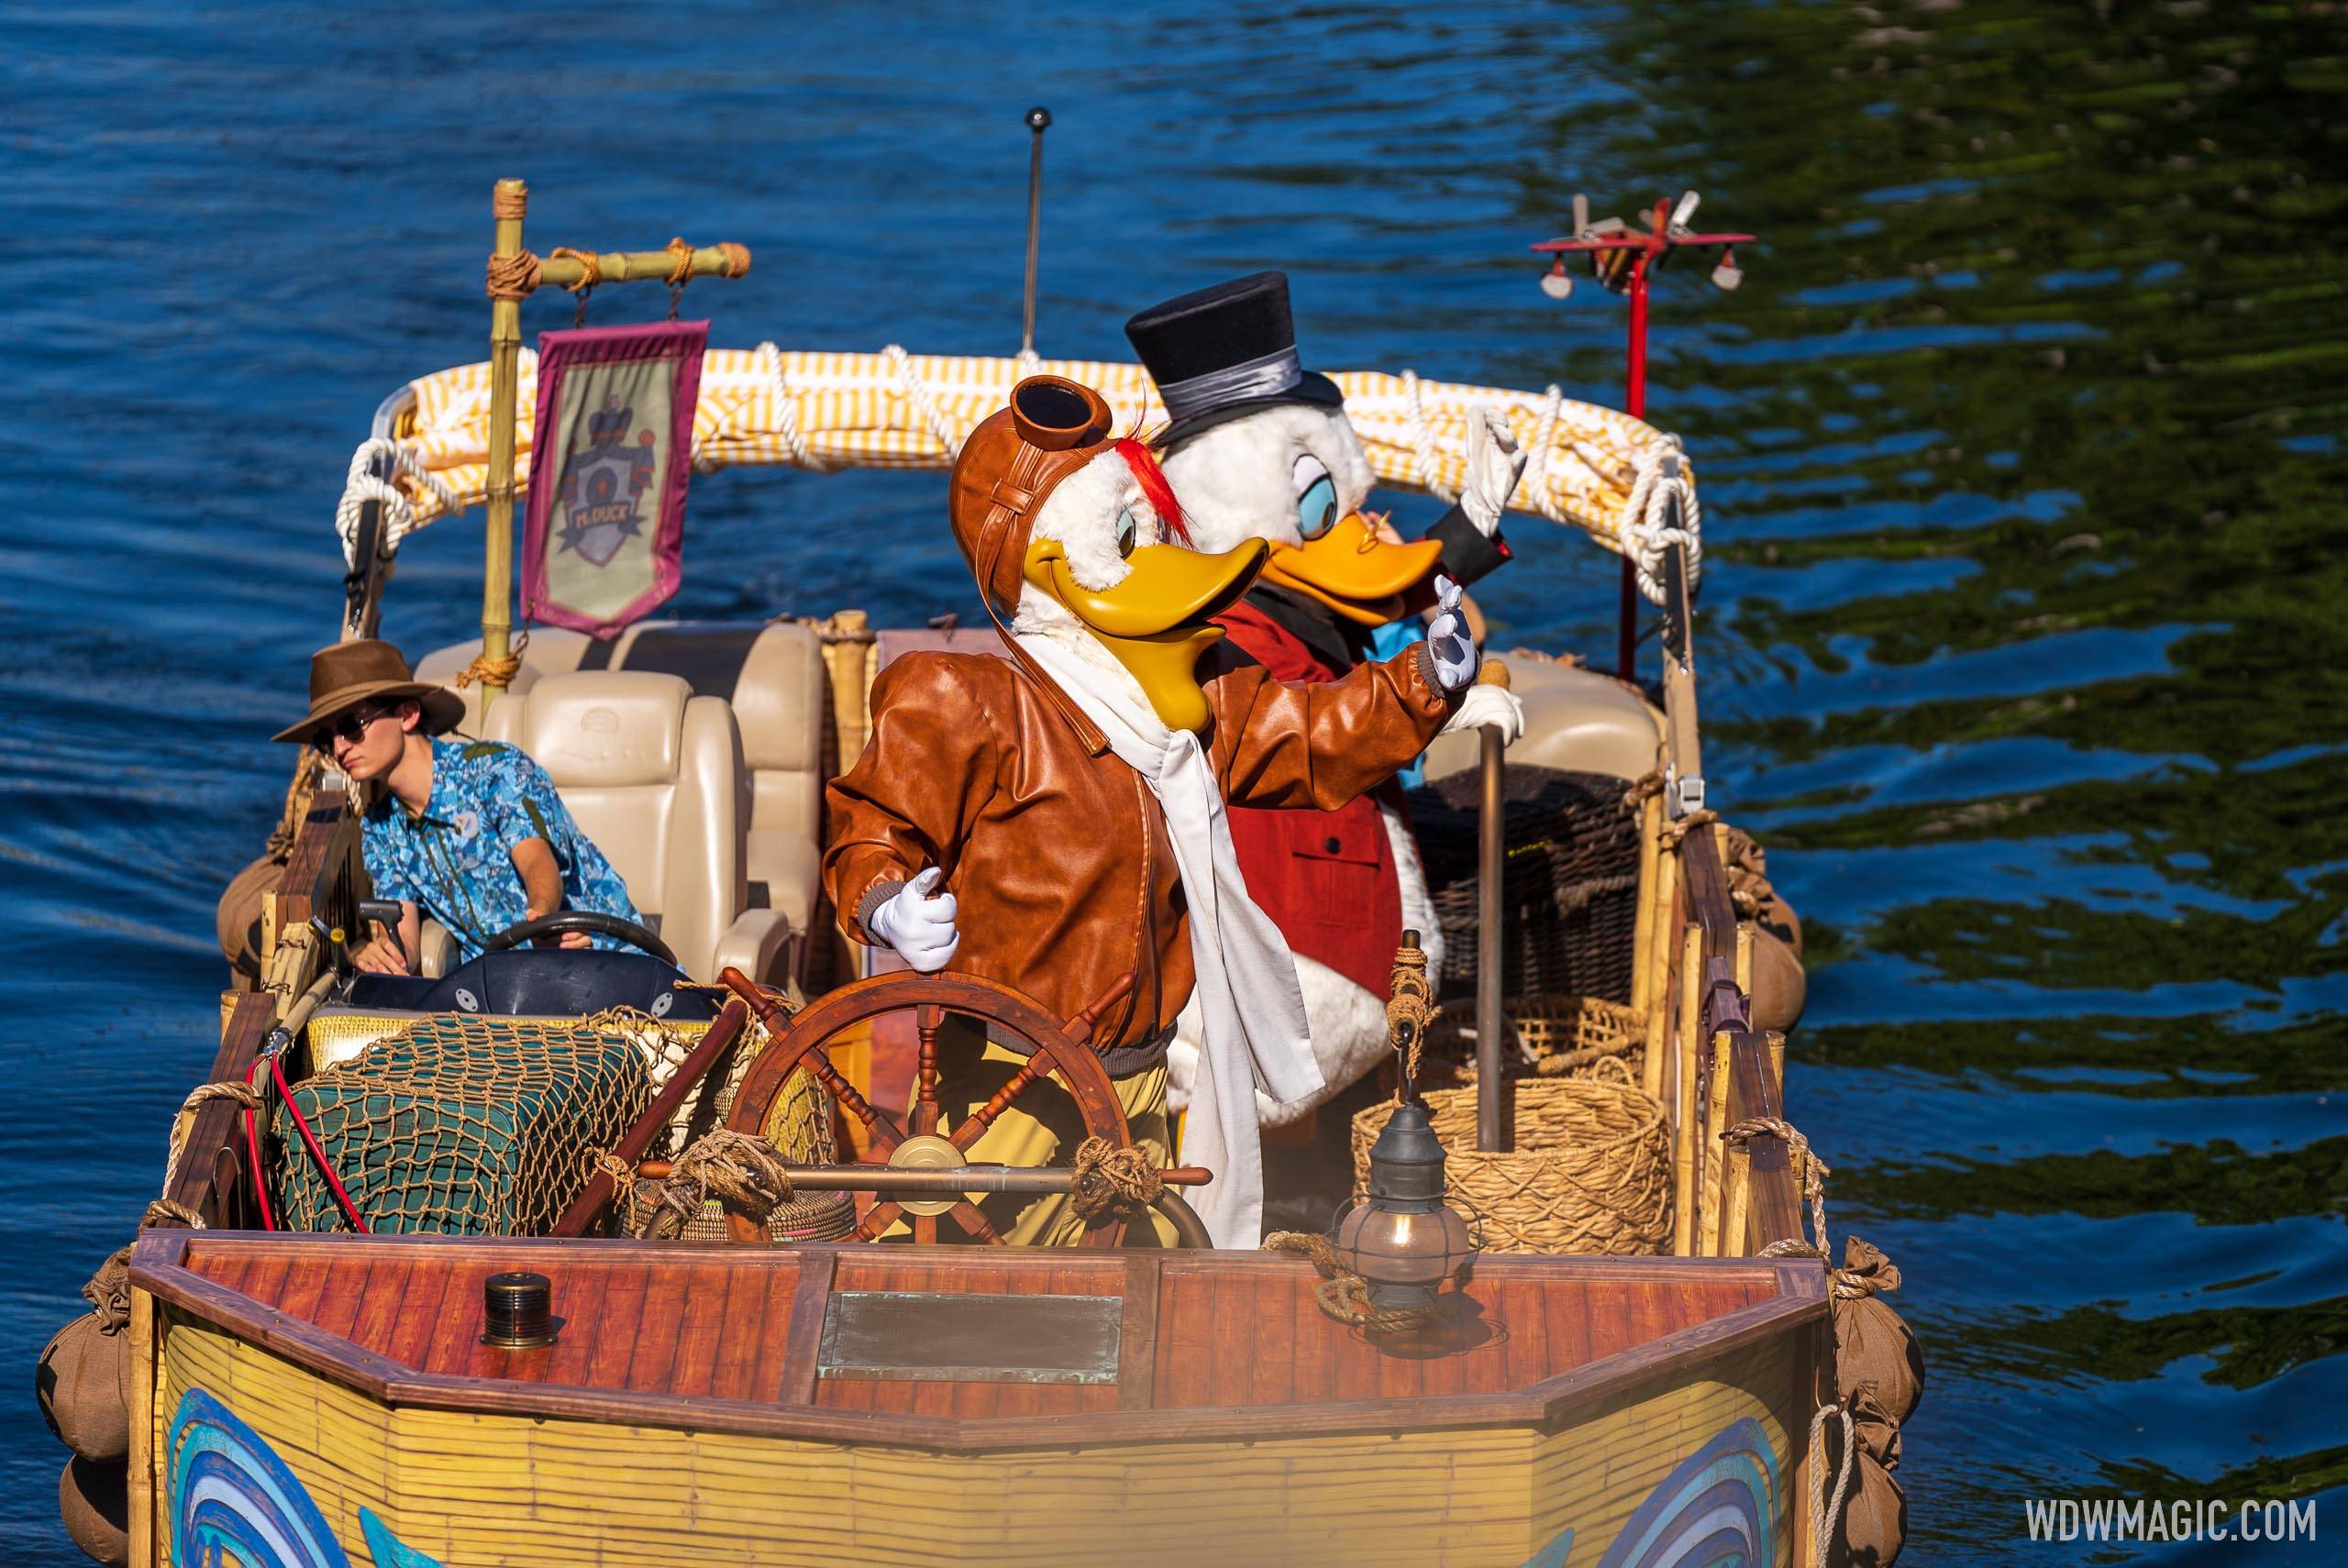 Adventurer's Flotilla – Disney Ducks and Up